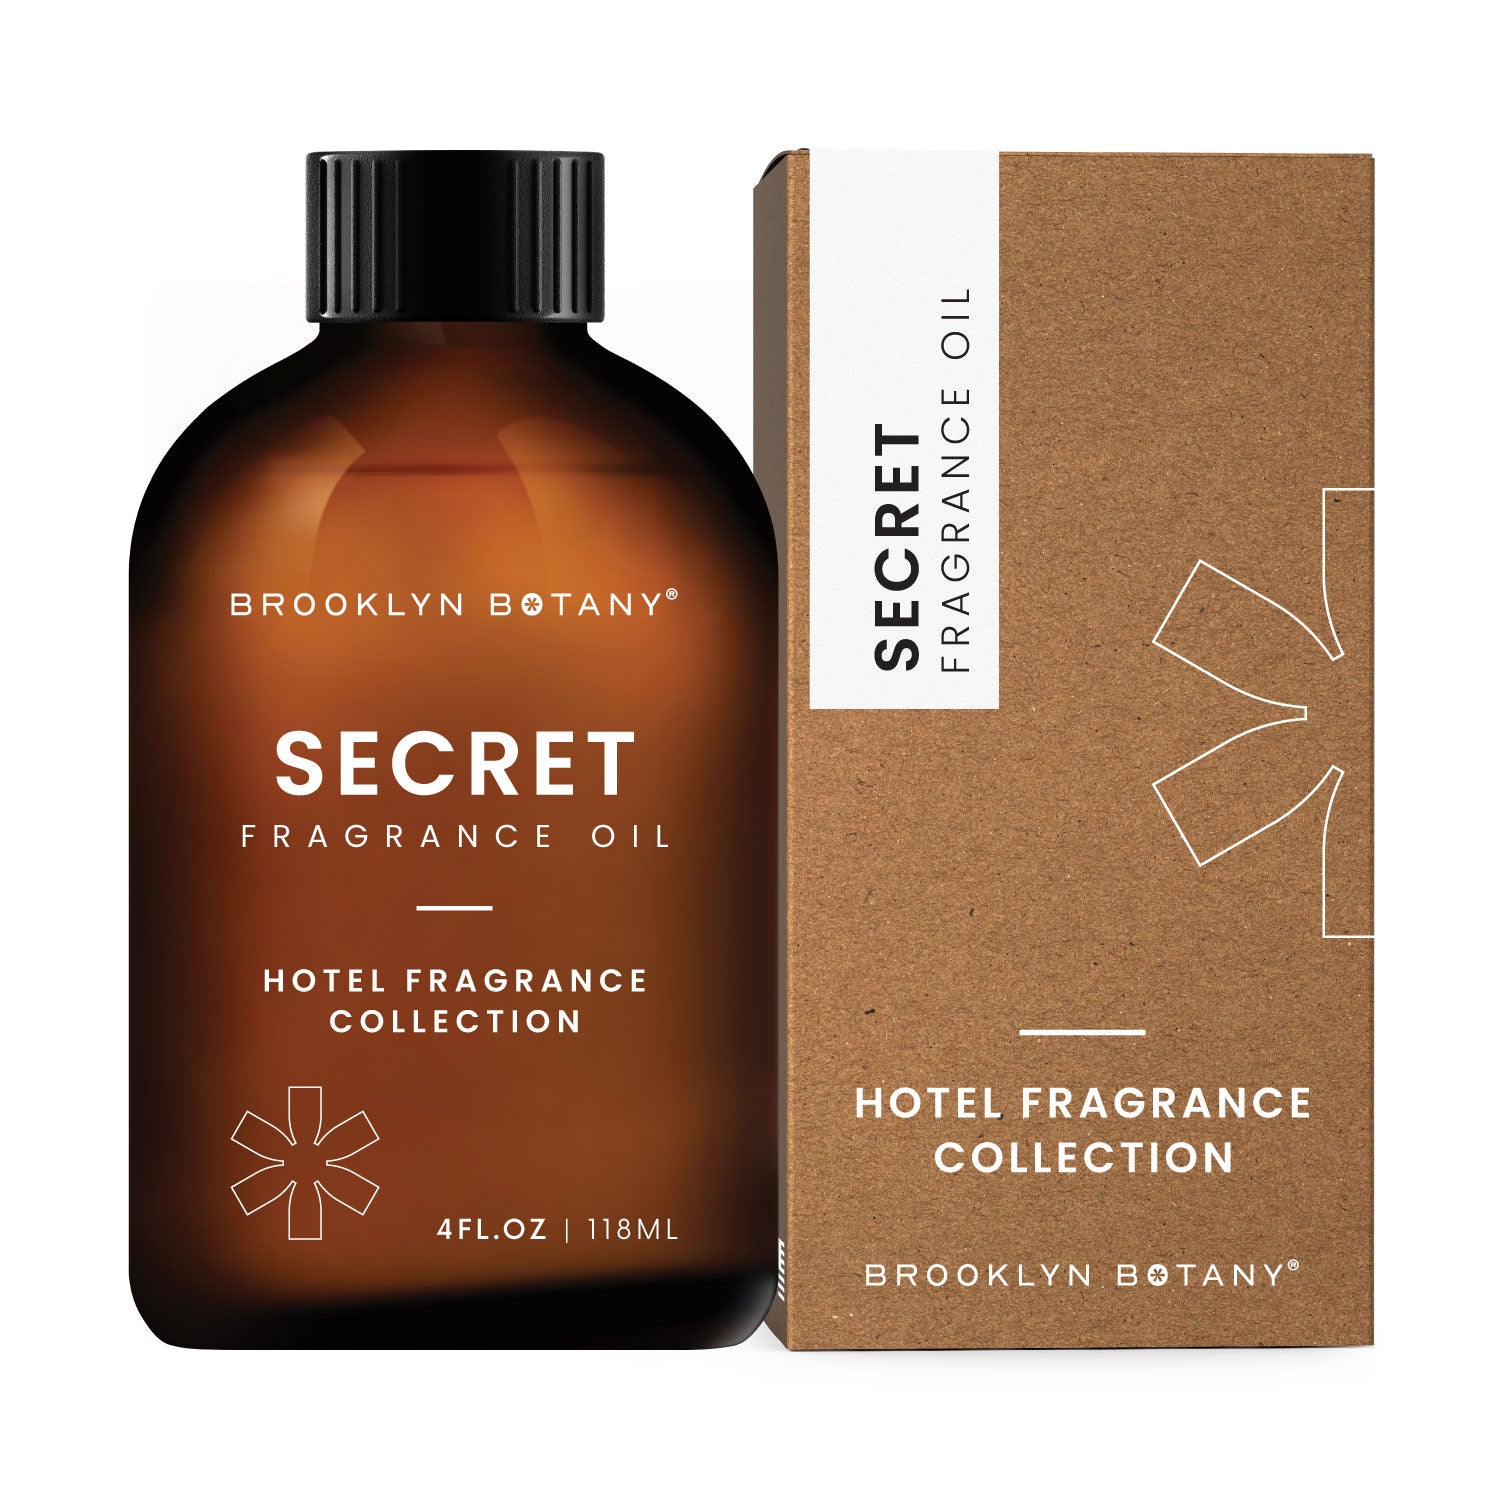 SHOPIFY_-BB-Secret-Fragrance-Oil-Main-Image-with-Box.jpg